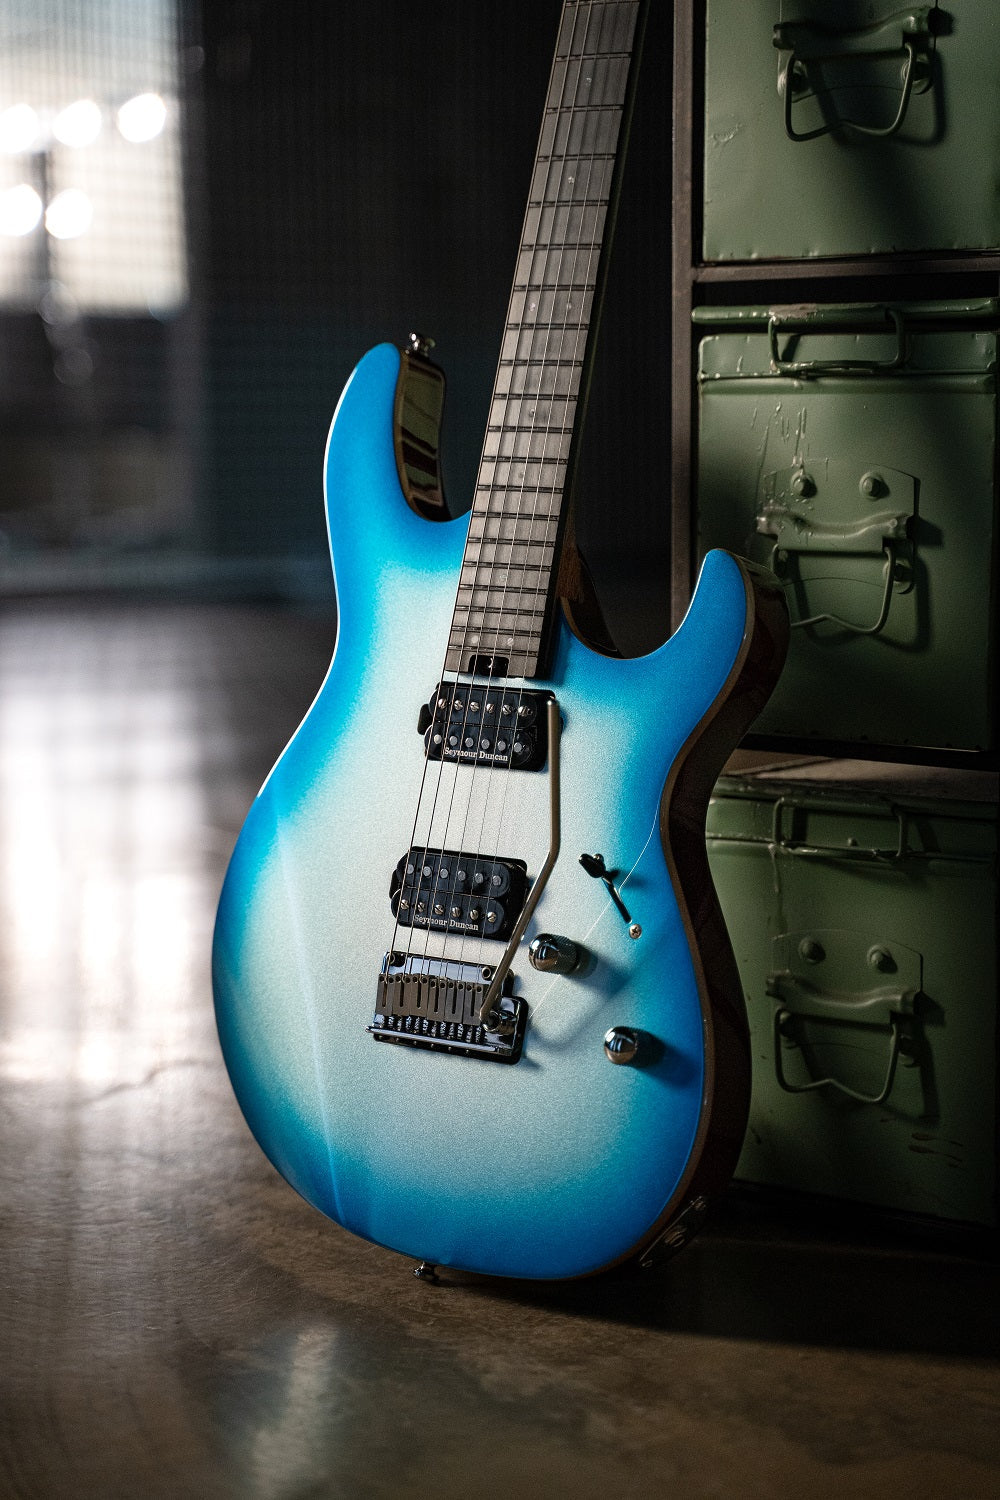 Cort G300 Glam Polar Ice Metallic Blue, Electric Guitar for sale at Richards Guitars.